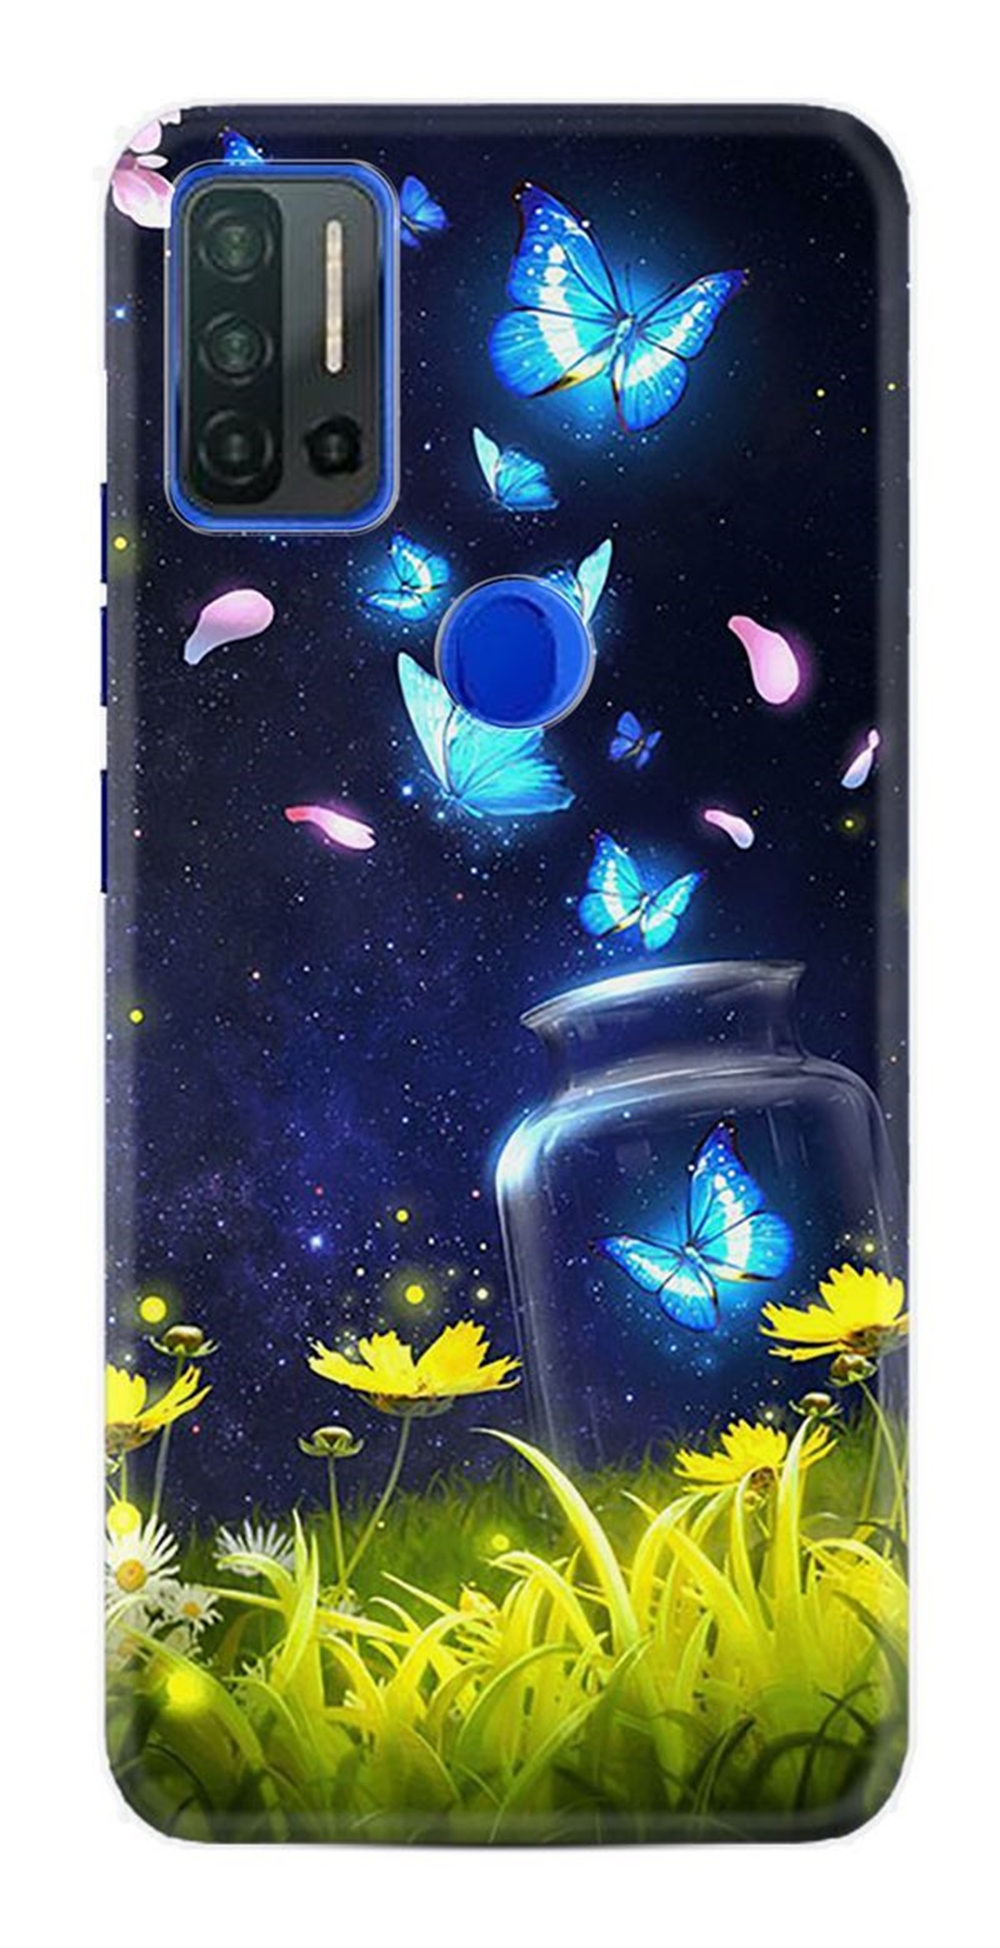 Reeder P13 Blue Max Pro Desenli Silikon Kılıf Neon Butterflys